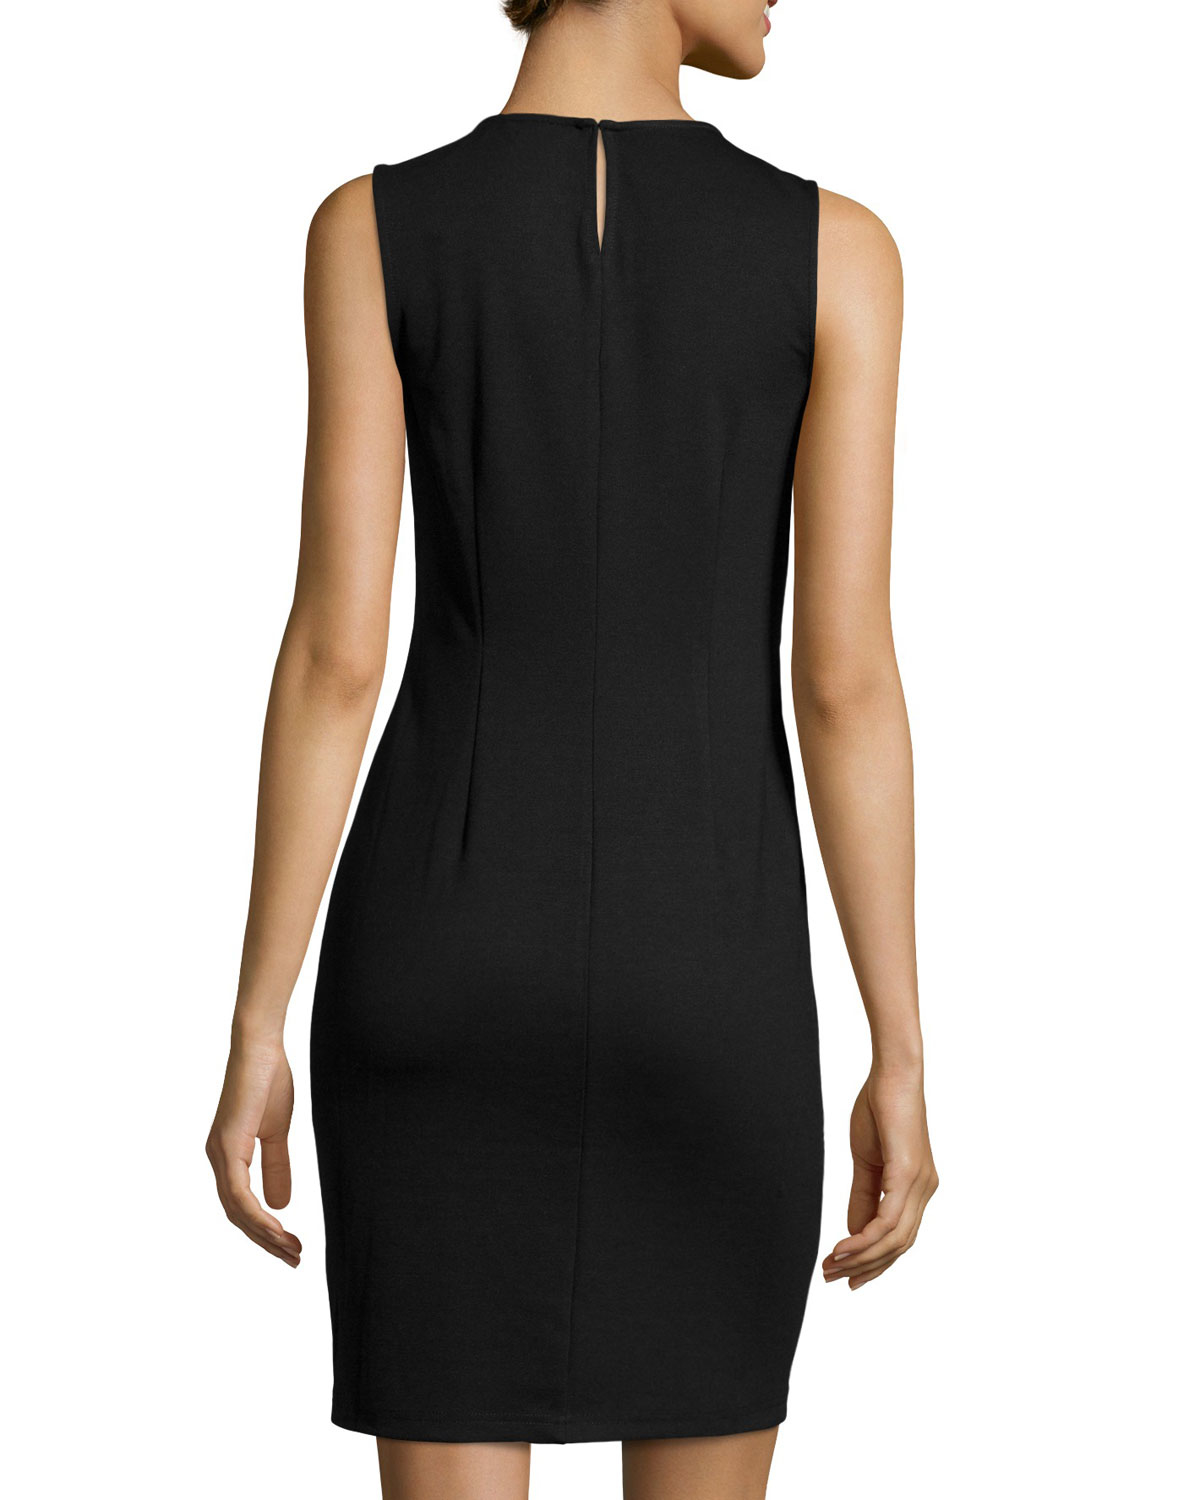 Lyst - Neiman Marcus Sleeveless Jersey Fringe-overlay Dress in Black